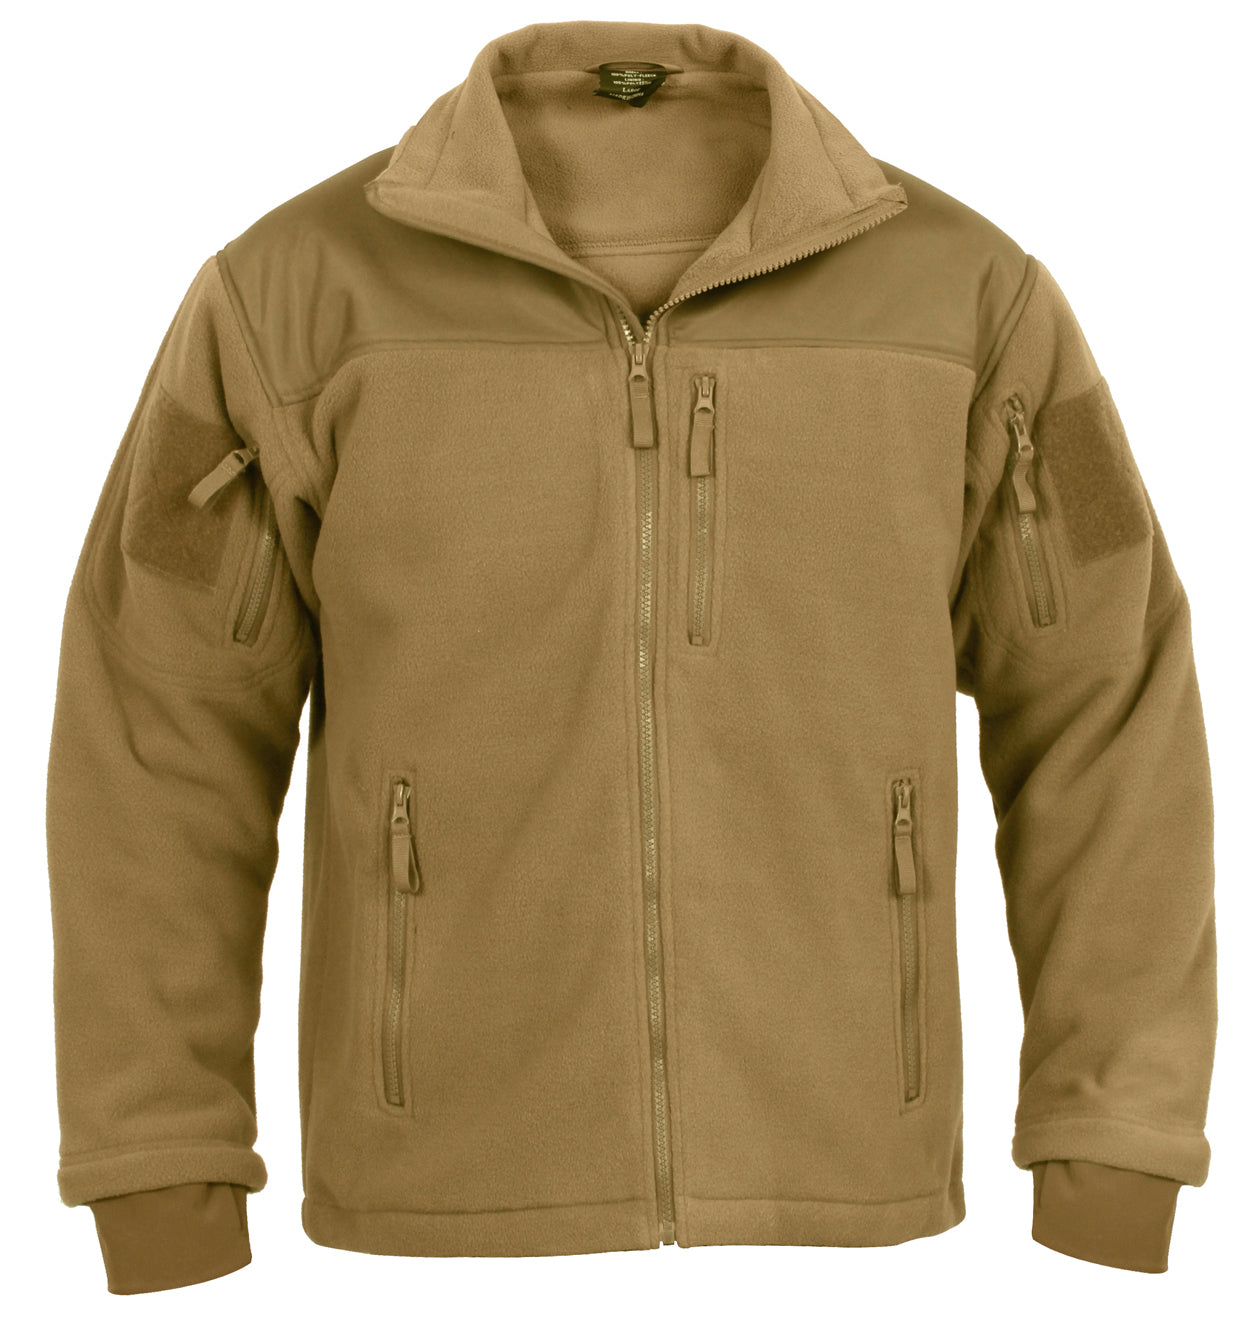 Milspec Spec Ops Tactical Fleece Jacket Gifts For Him MilTac Tactical Military Outdoor Gear Australia